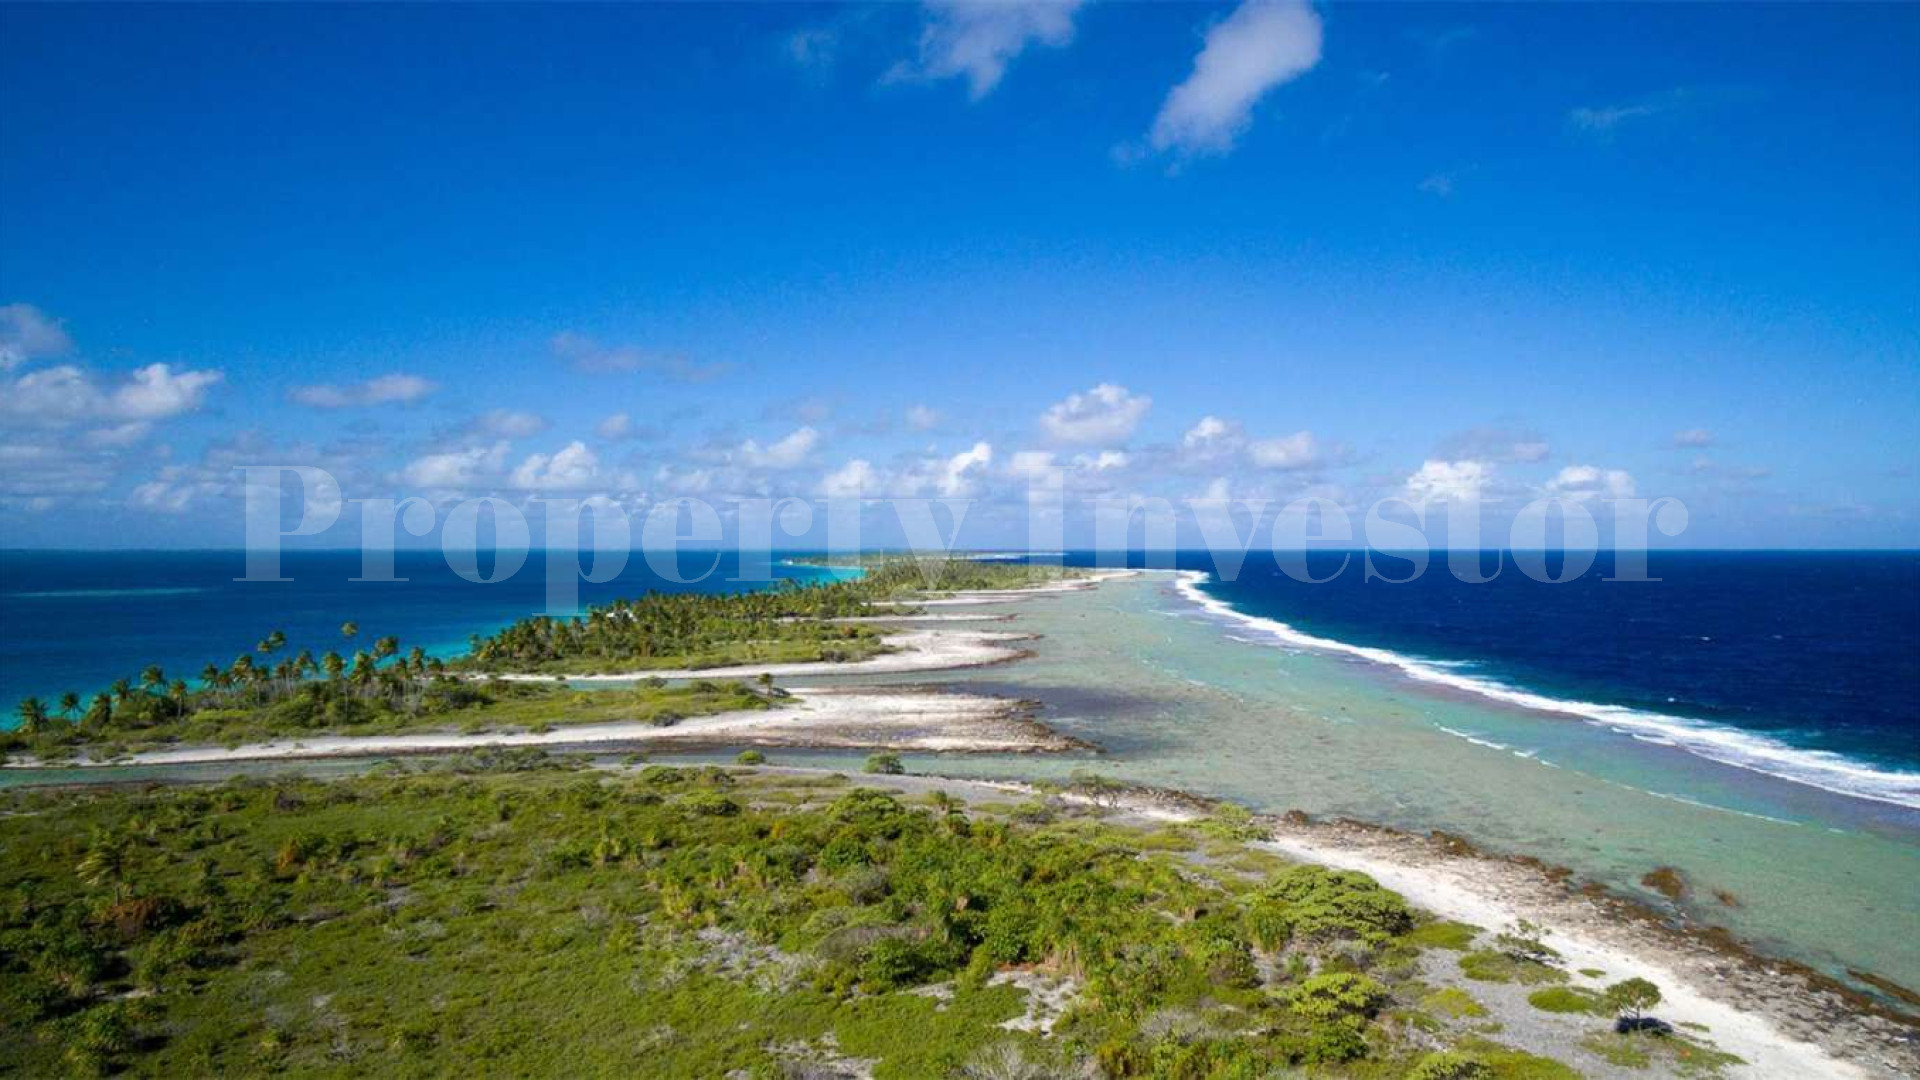 Pristine 9.7 Hectare Private Virgin Island for Sale in French Polynesia